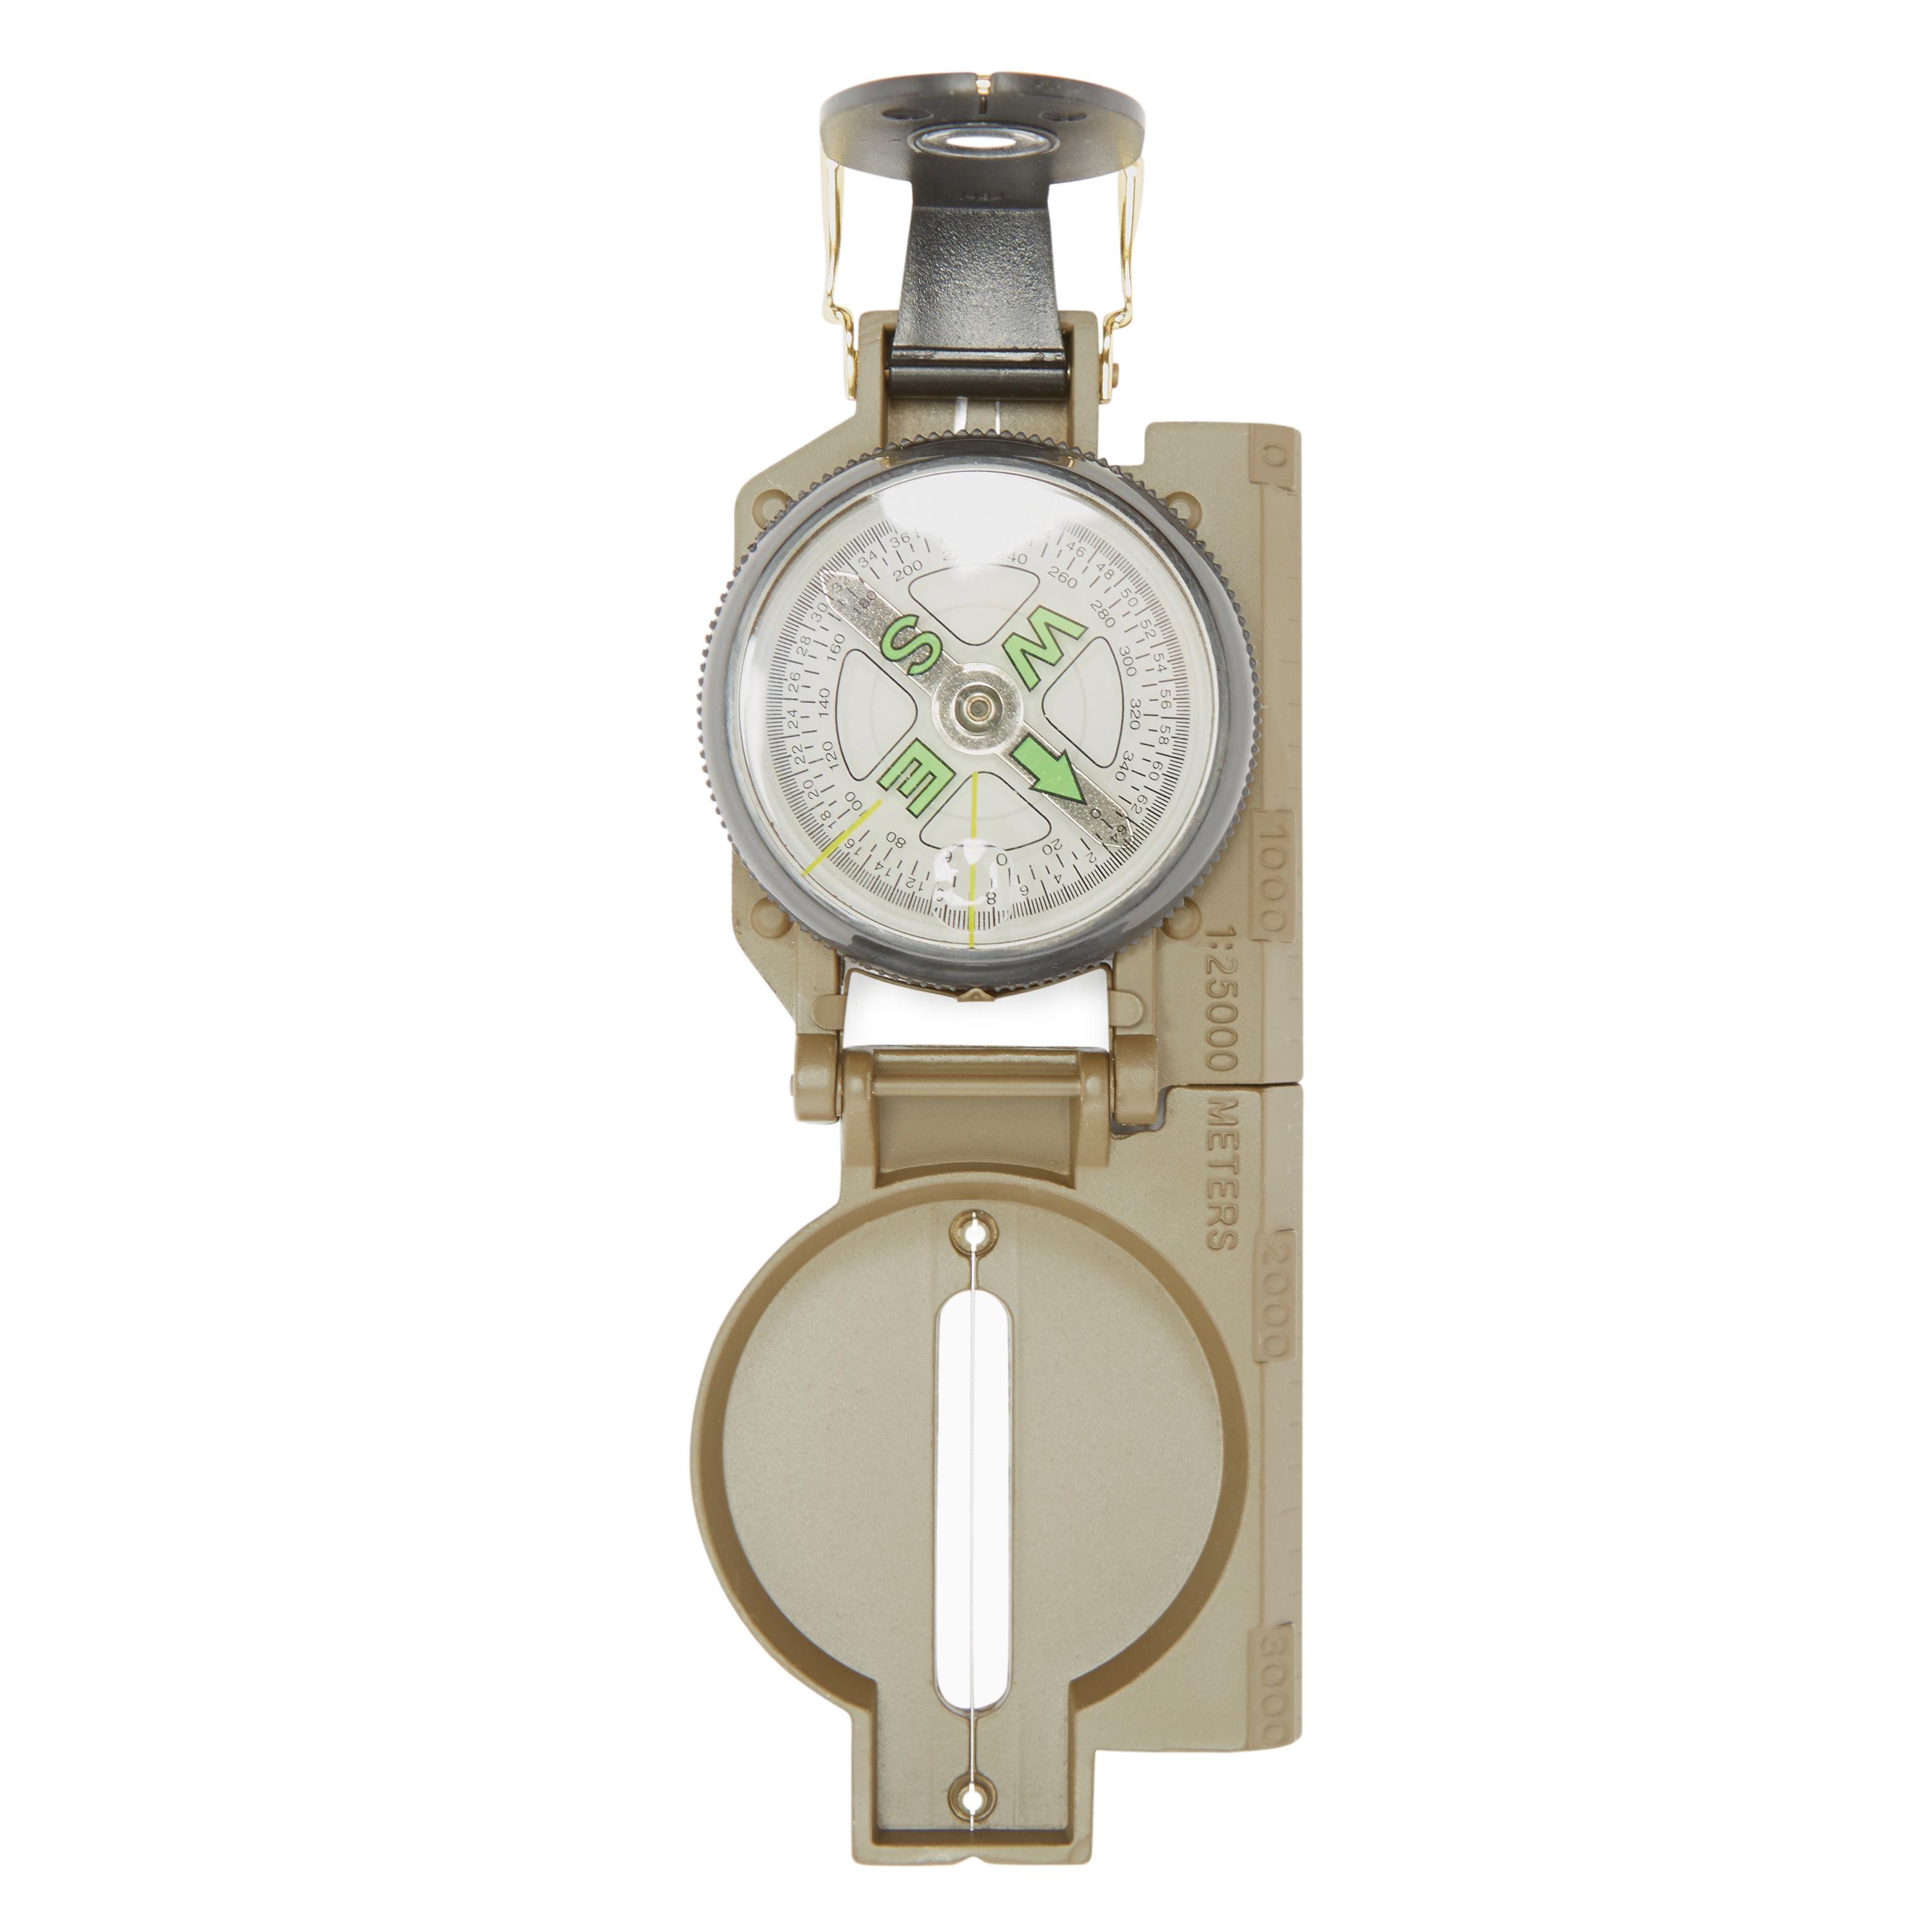 Image of Eurohike Dlx Lensatic Compass - Multi/Compass, Multi/COMPASS